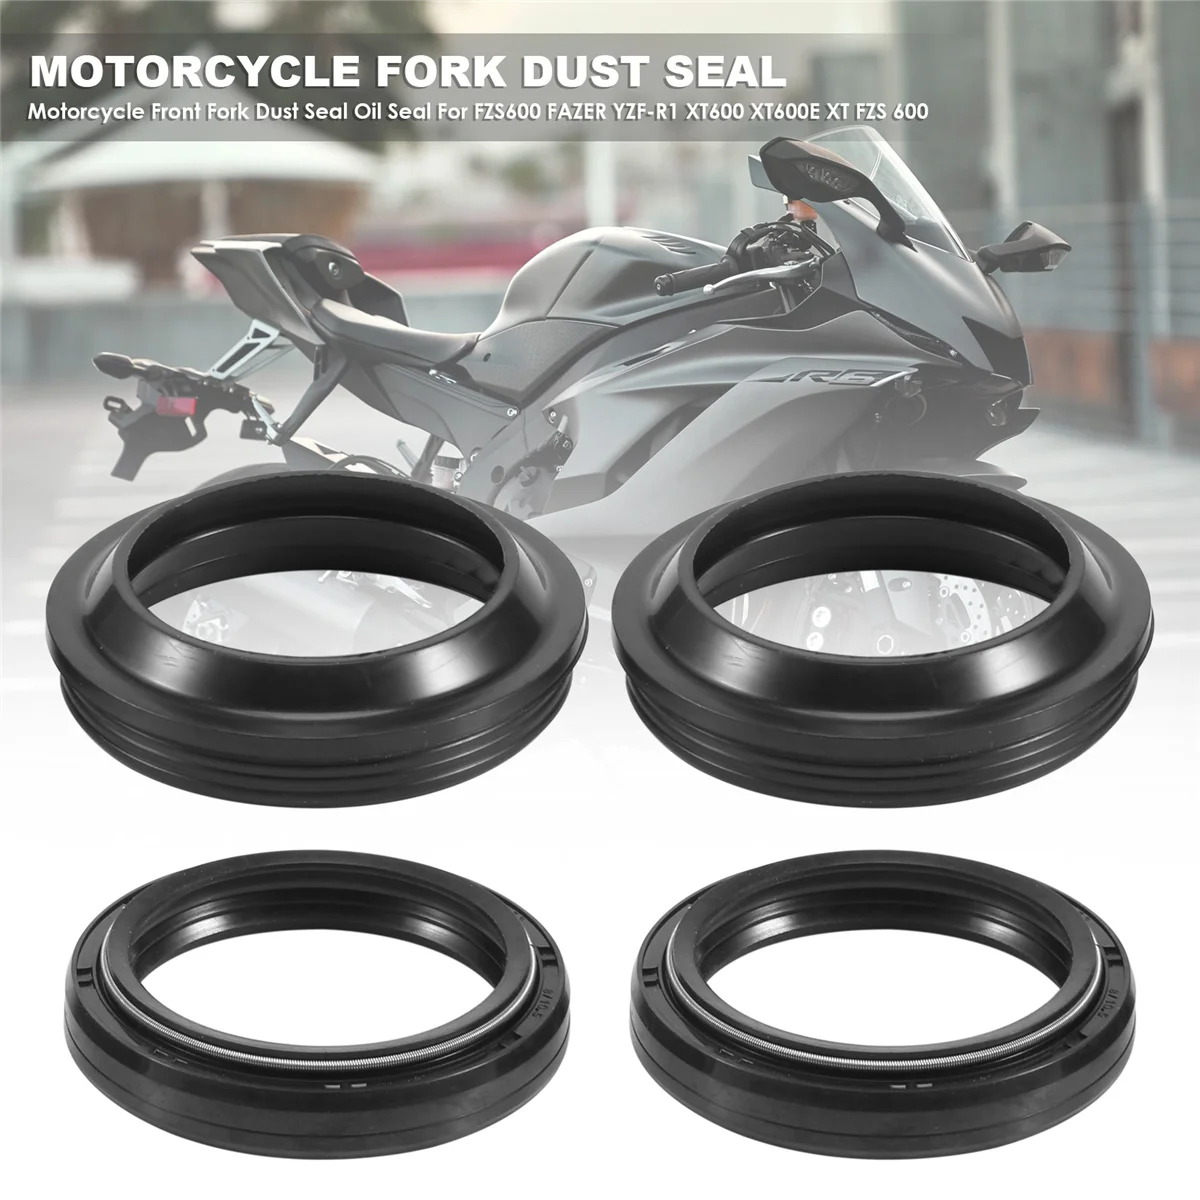 

Motorcycle Front Fork Dust Seal and Oil Seal for Yamaha FZS600 FAZER YZF-R1 XT600 XT600E XT FZS 600